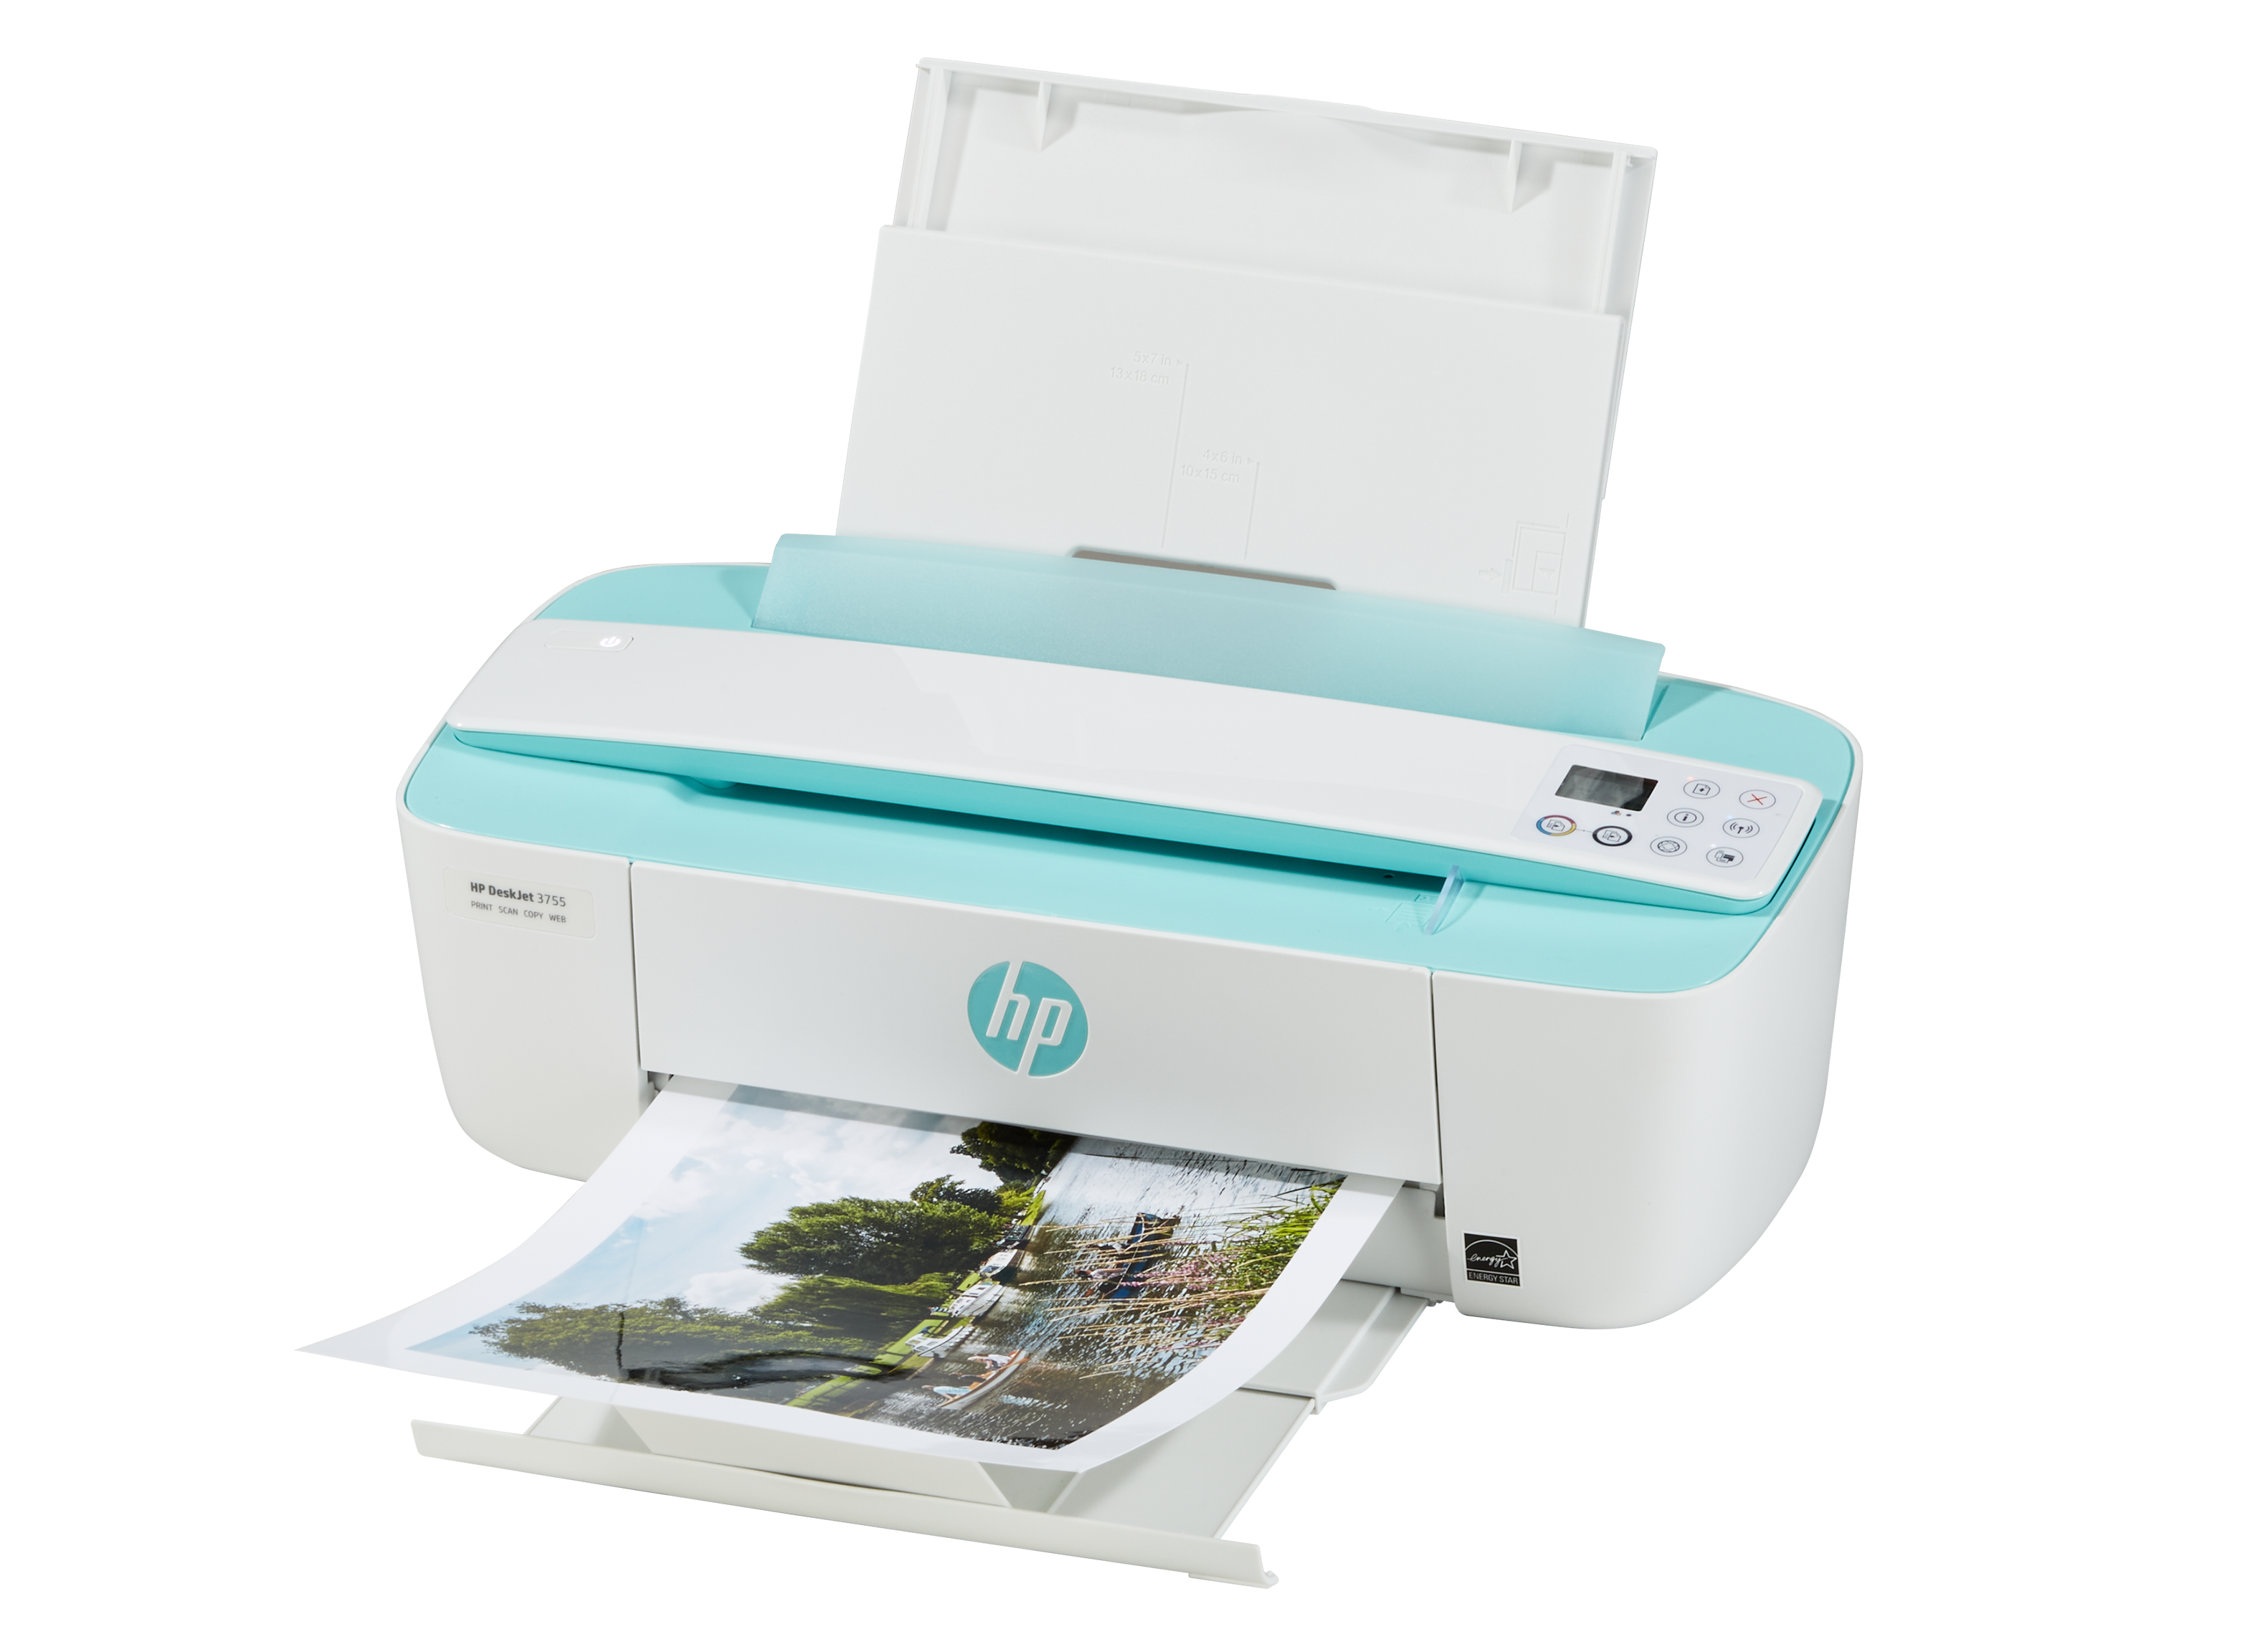 3755 Printer - Consumer Reports